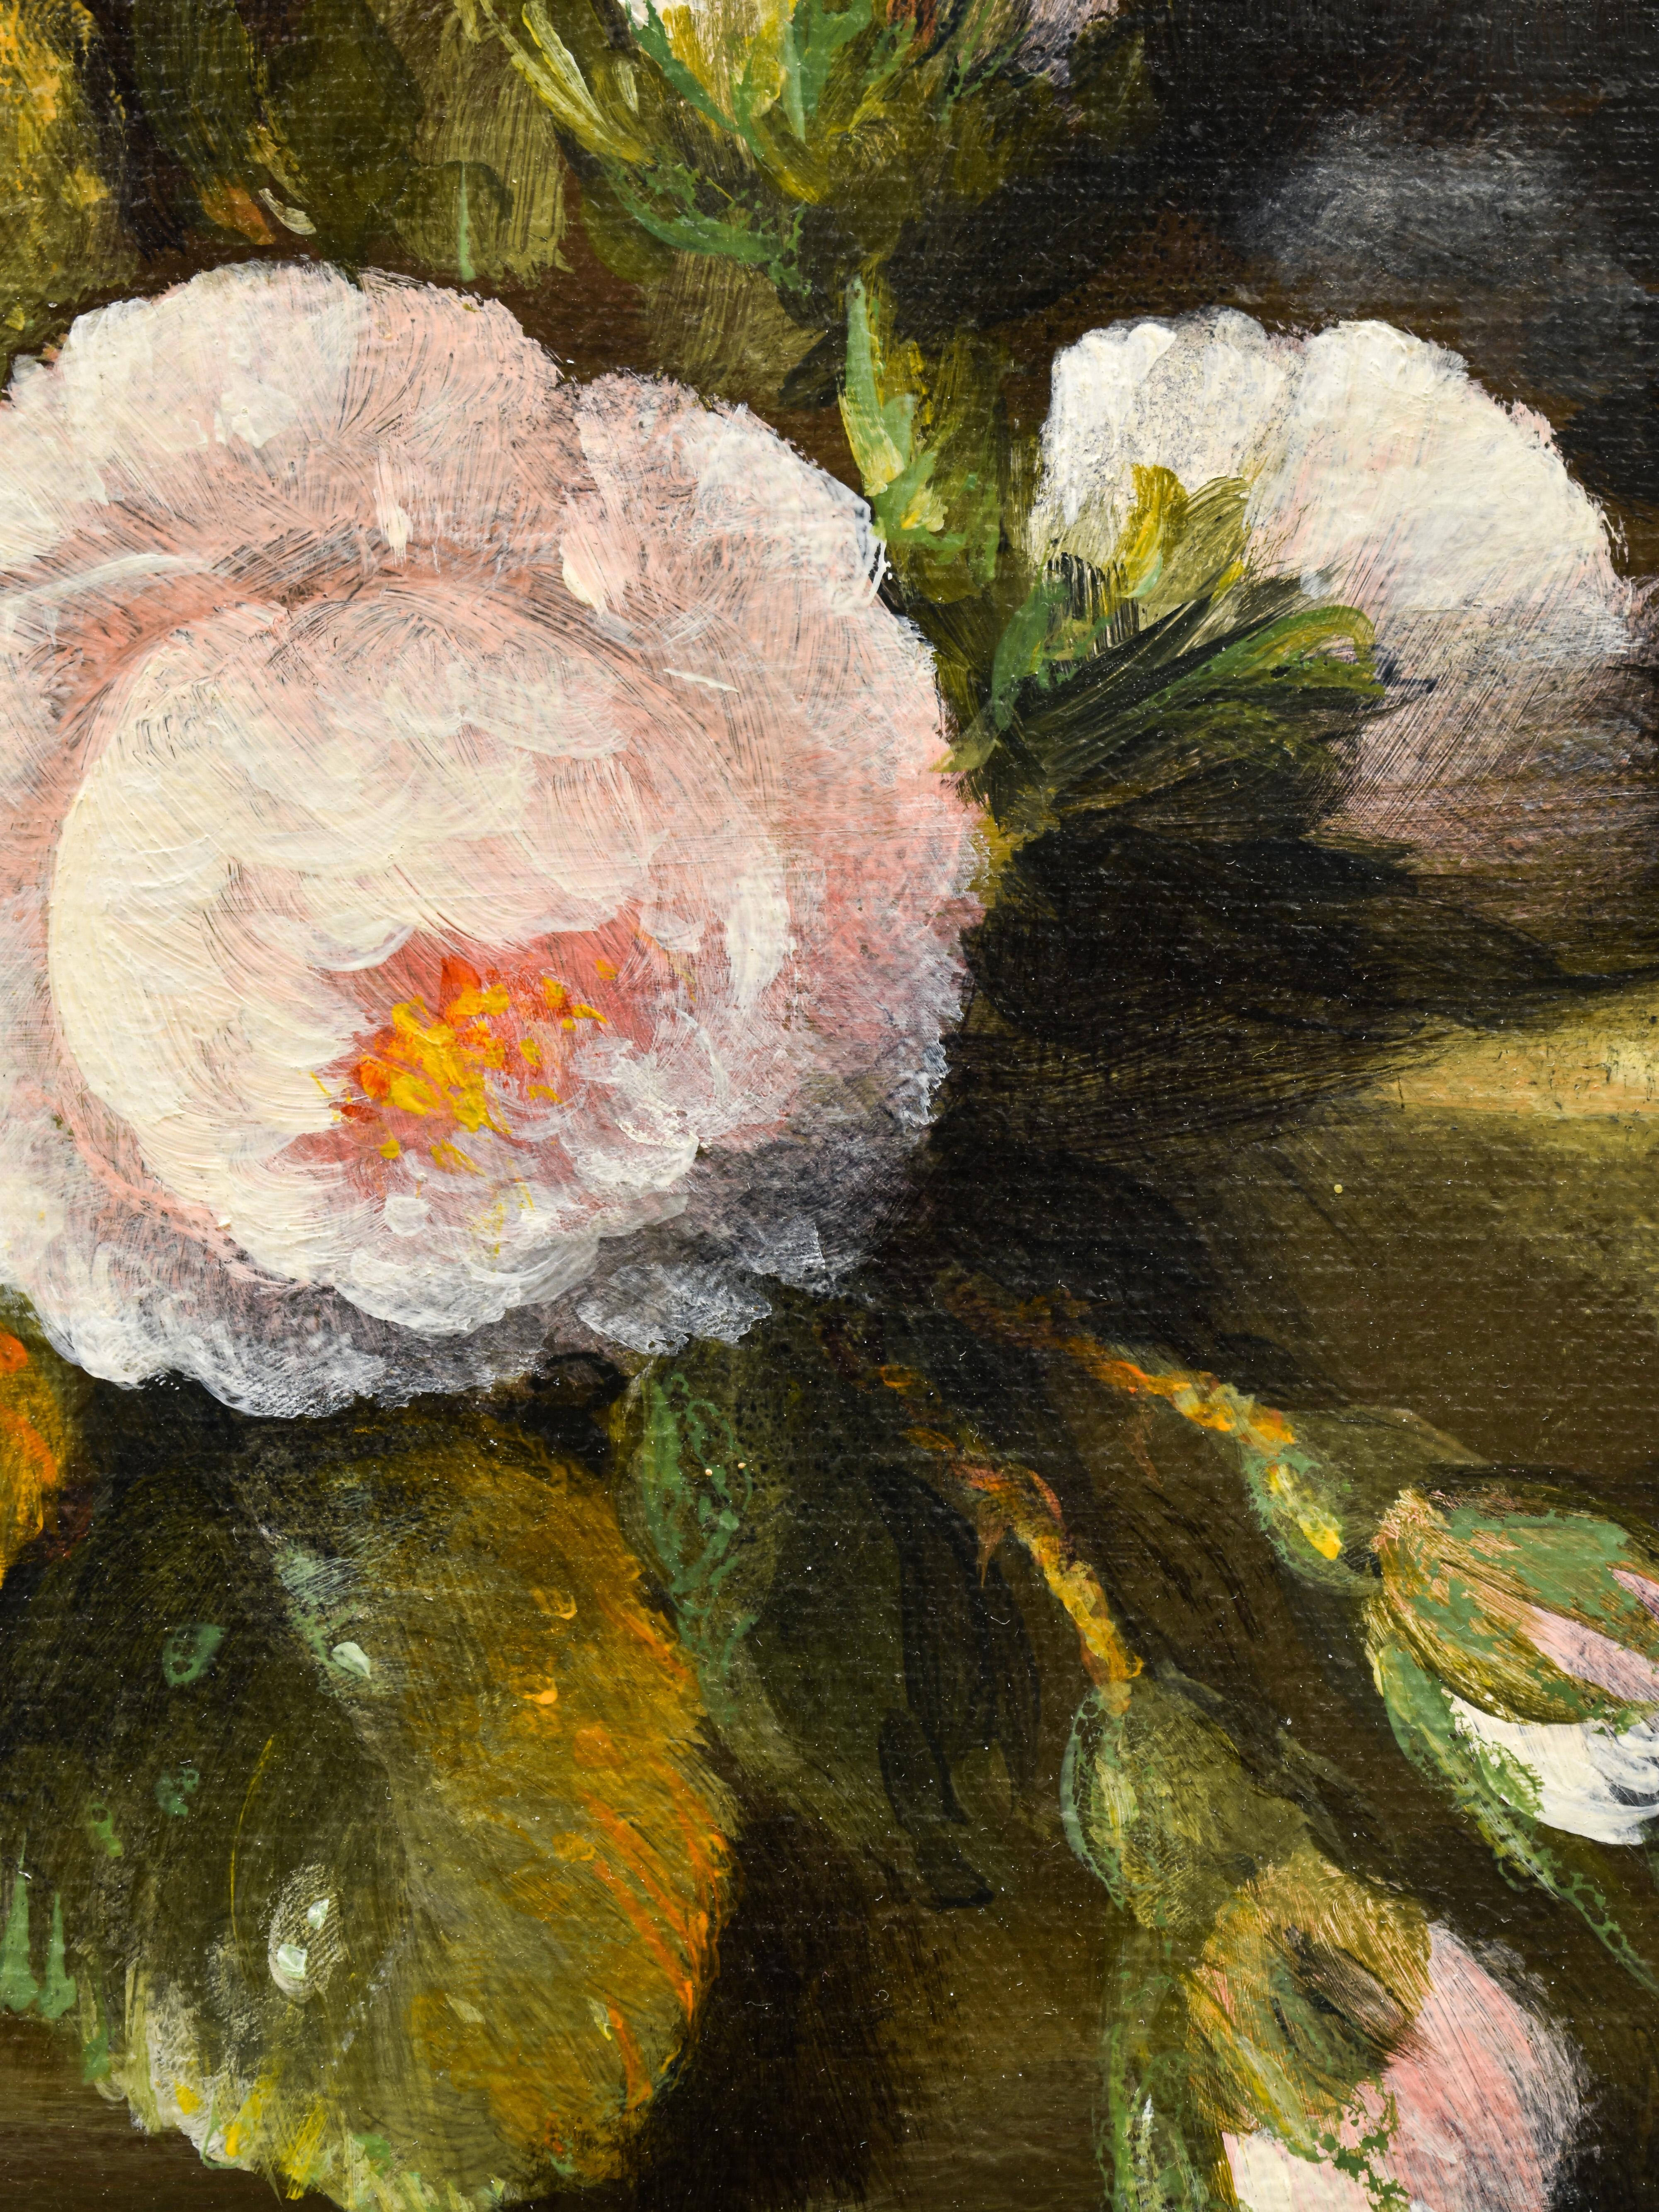 Flower Still Life - Thomas Heesakkers - Oil paint on canvas - Romantic - Dutch  For Sale 1